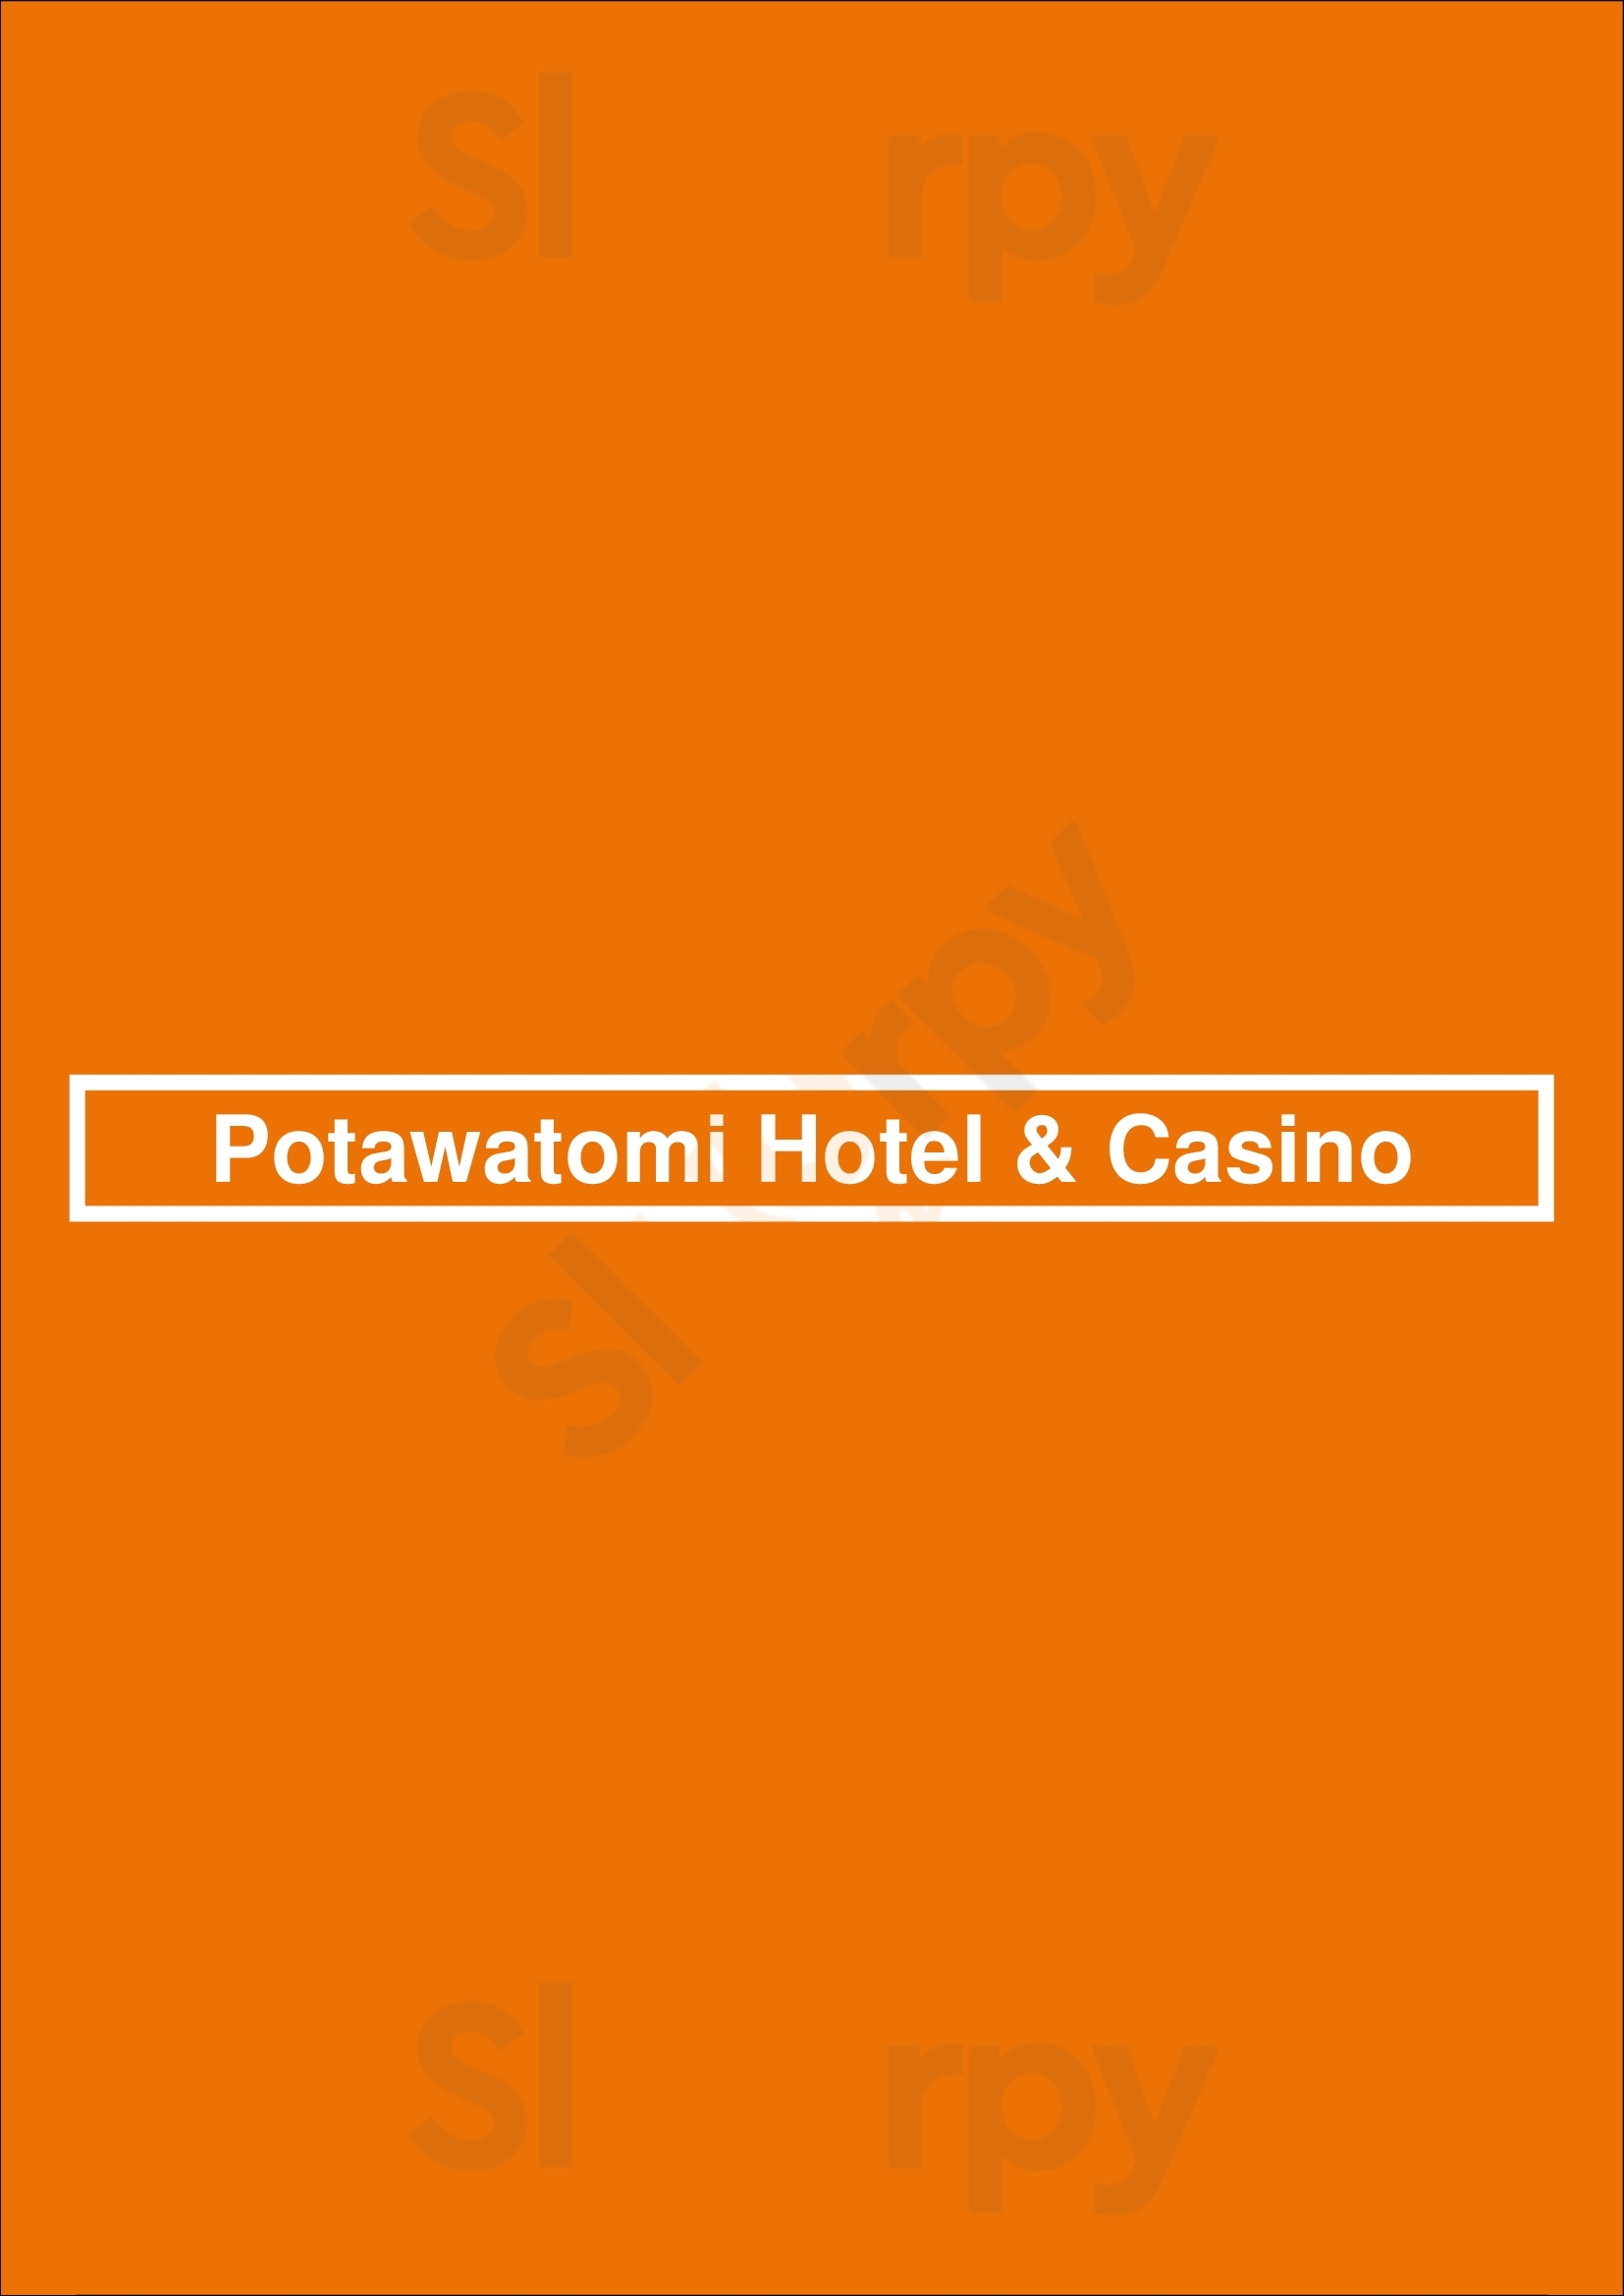 Potawatomi Hotel & Casino Milwaukee Menu - 1